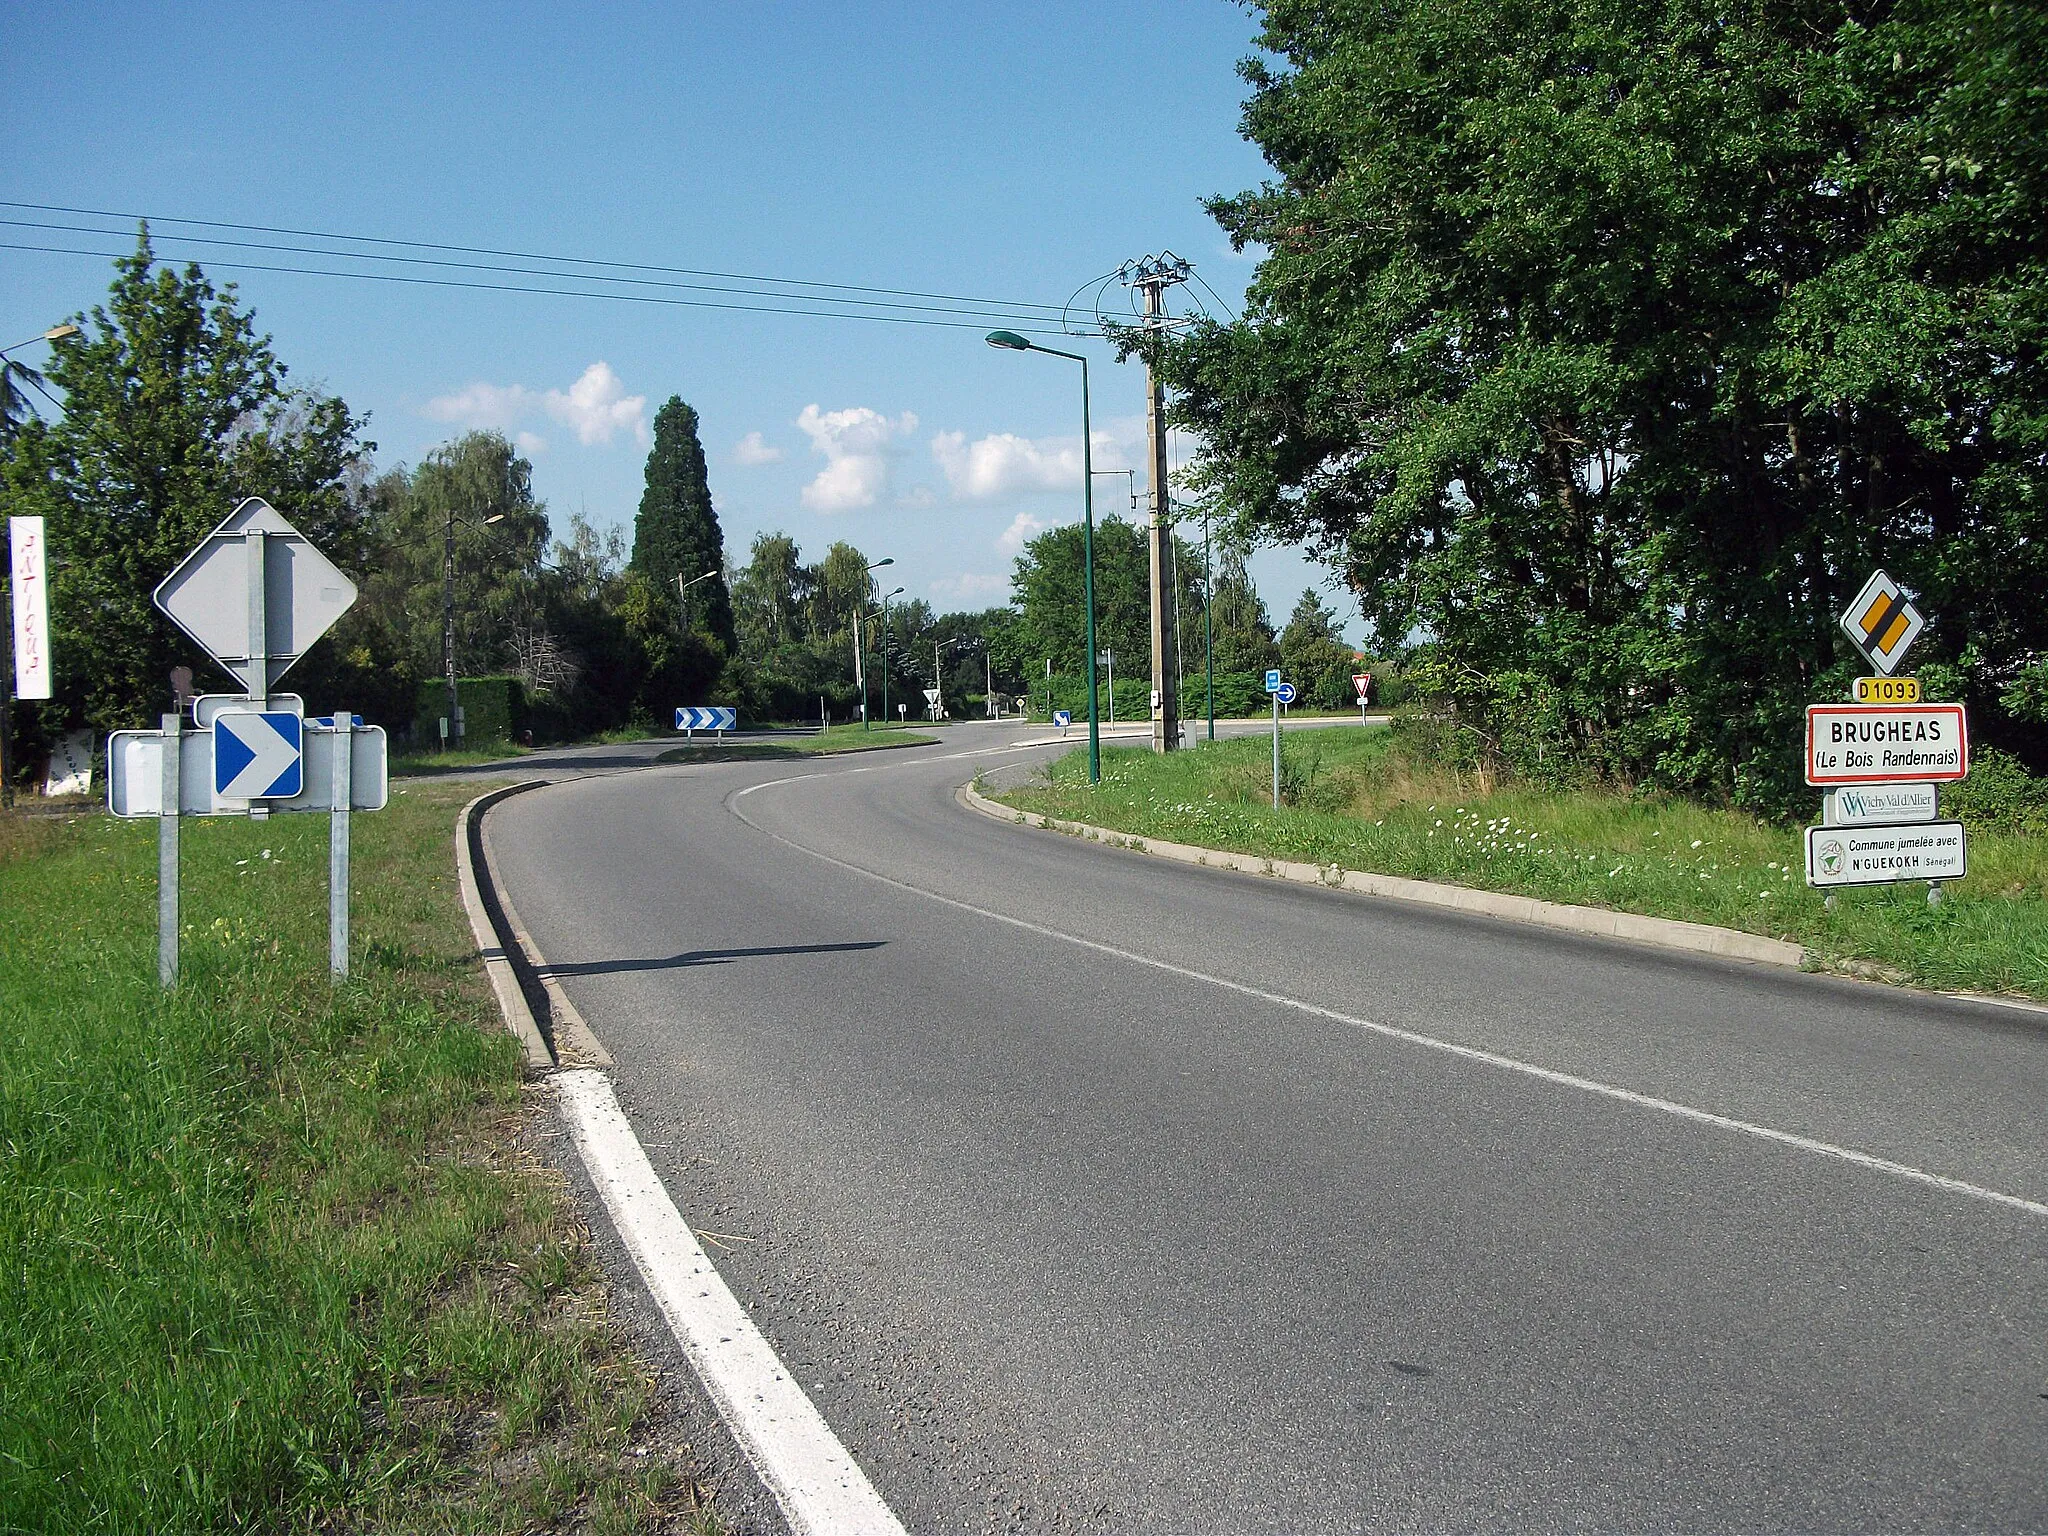 Photo showing: Entrance of Brugheas (Le Bois Randenais) by departmental road 1093 towards Vichy.